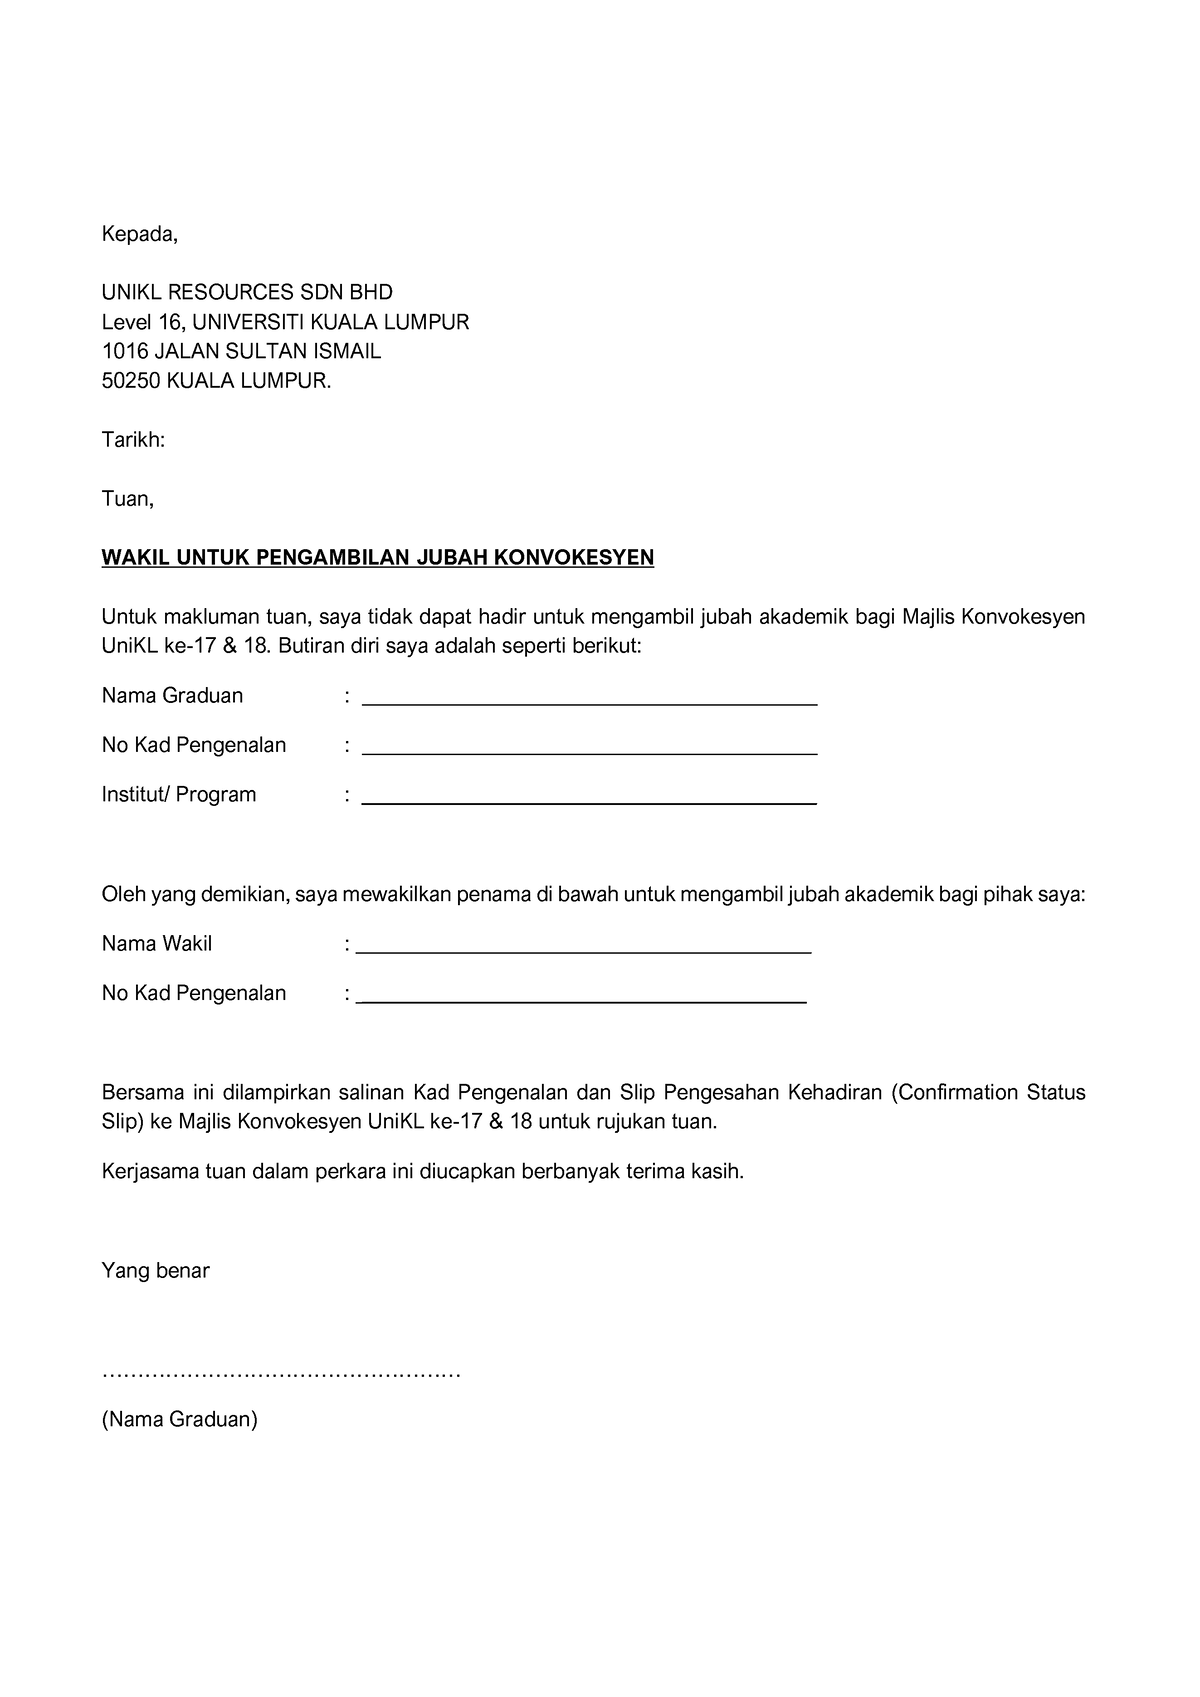 Surat Wakil Jubah Letter Of Consent Kepada Unikl Resources Sdn Bhd